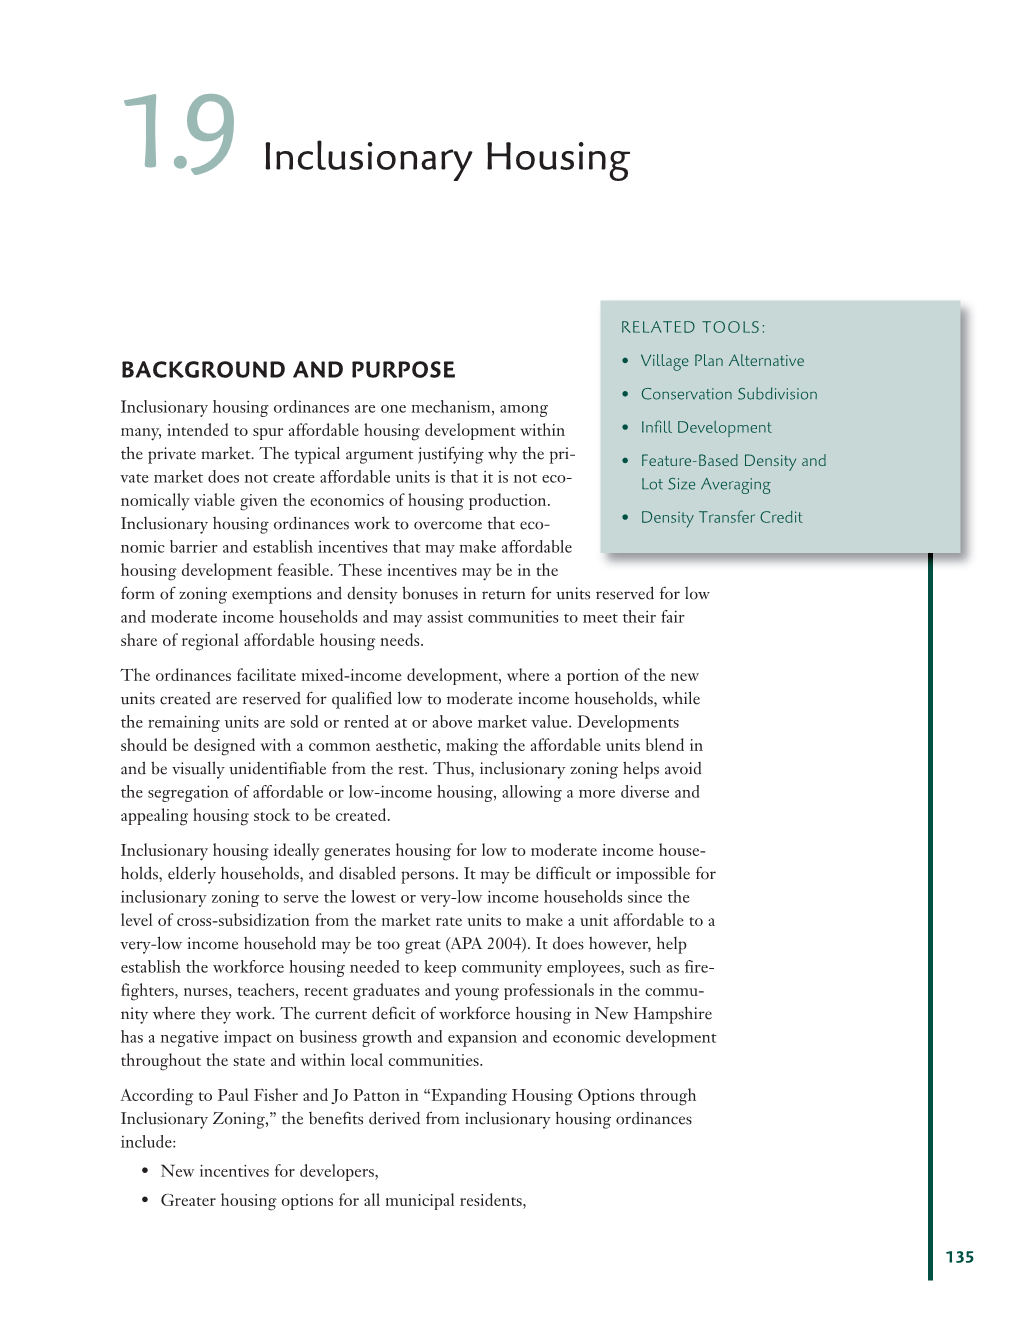 Inclusionary Housing